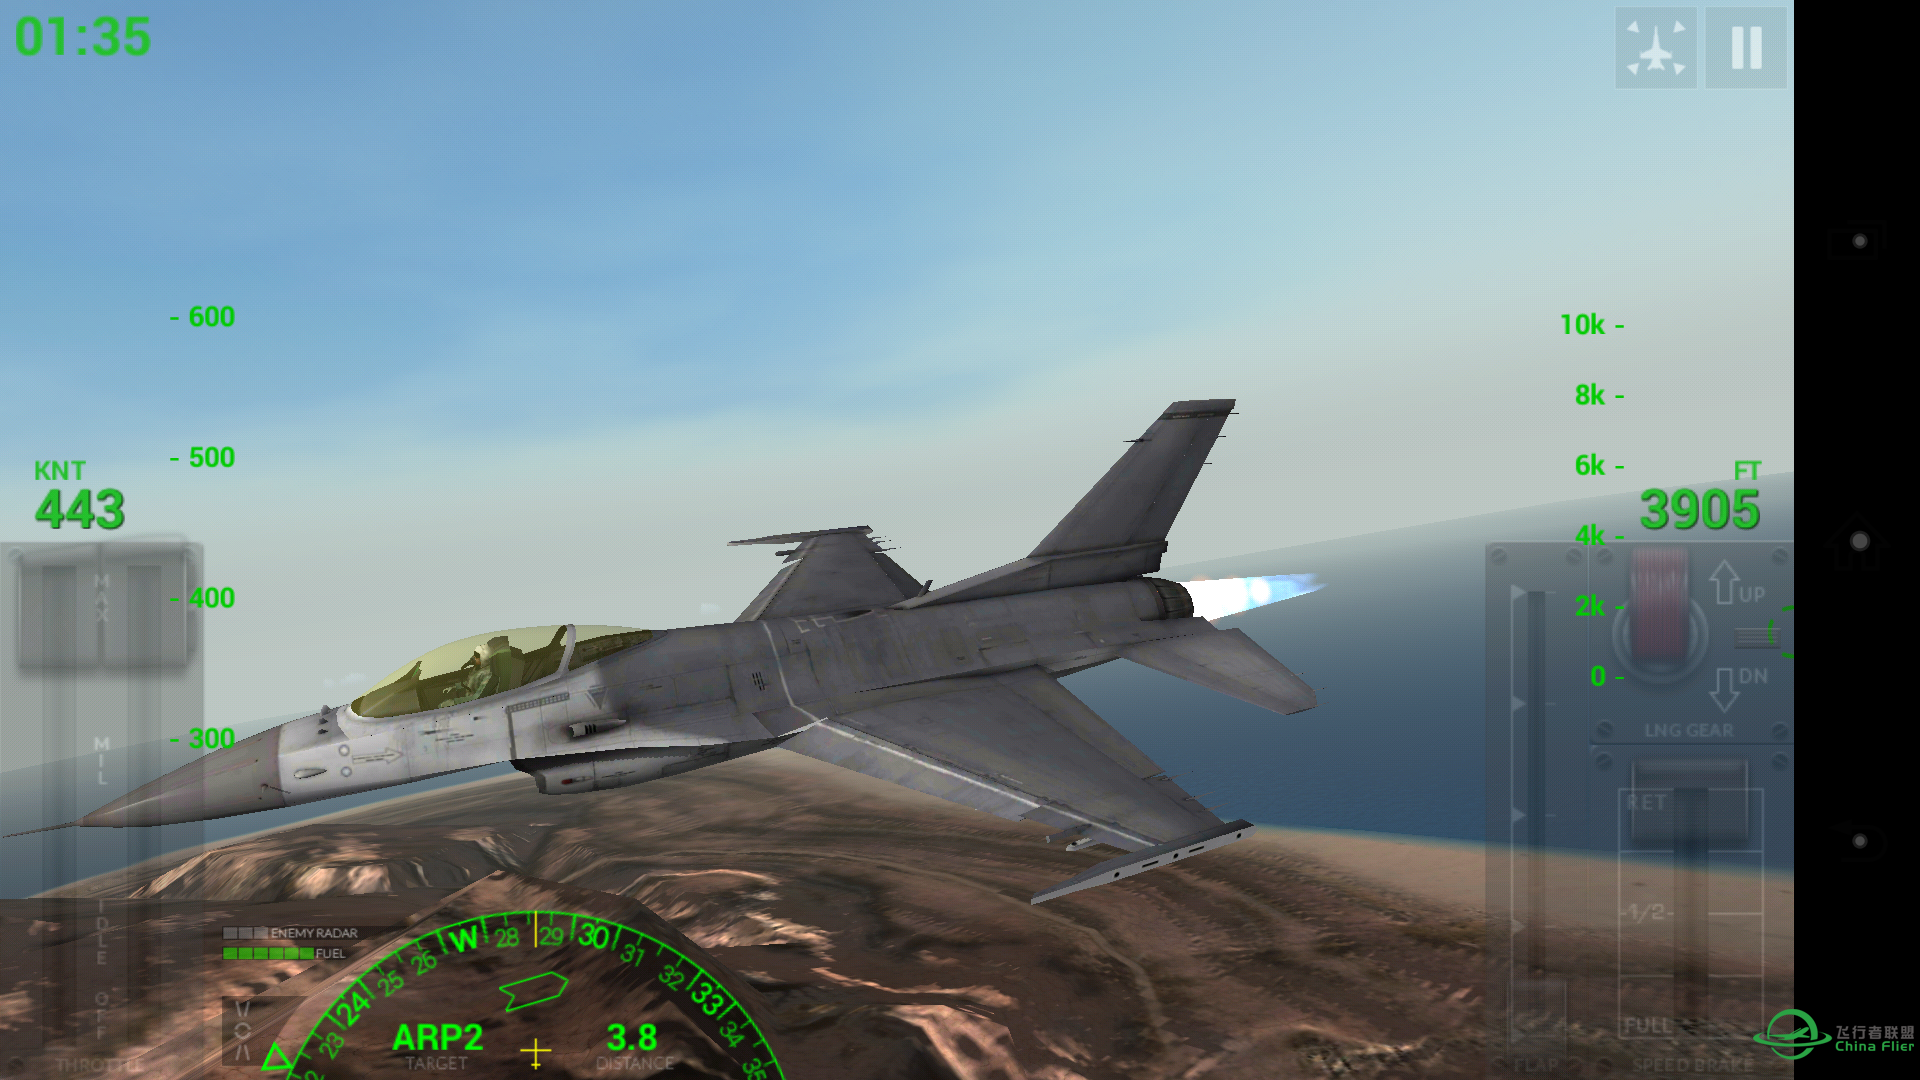 [截图而已]F18 Carrier Landing2 Pro-7923 